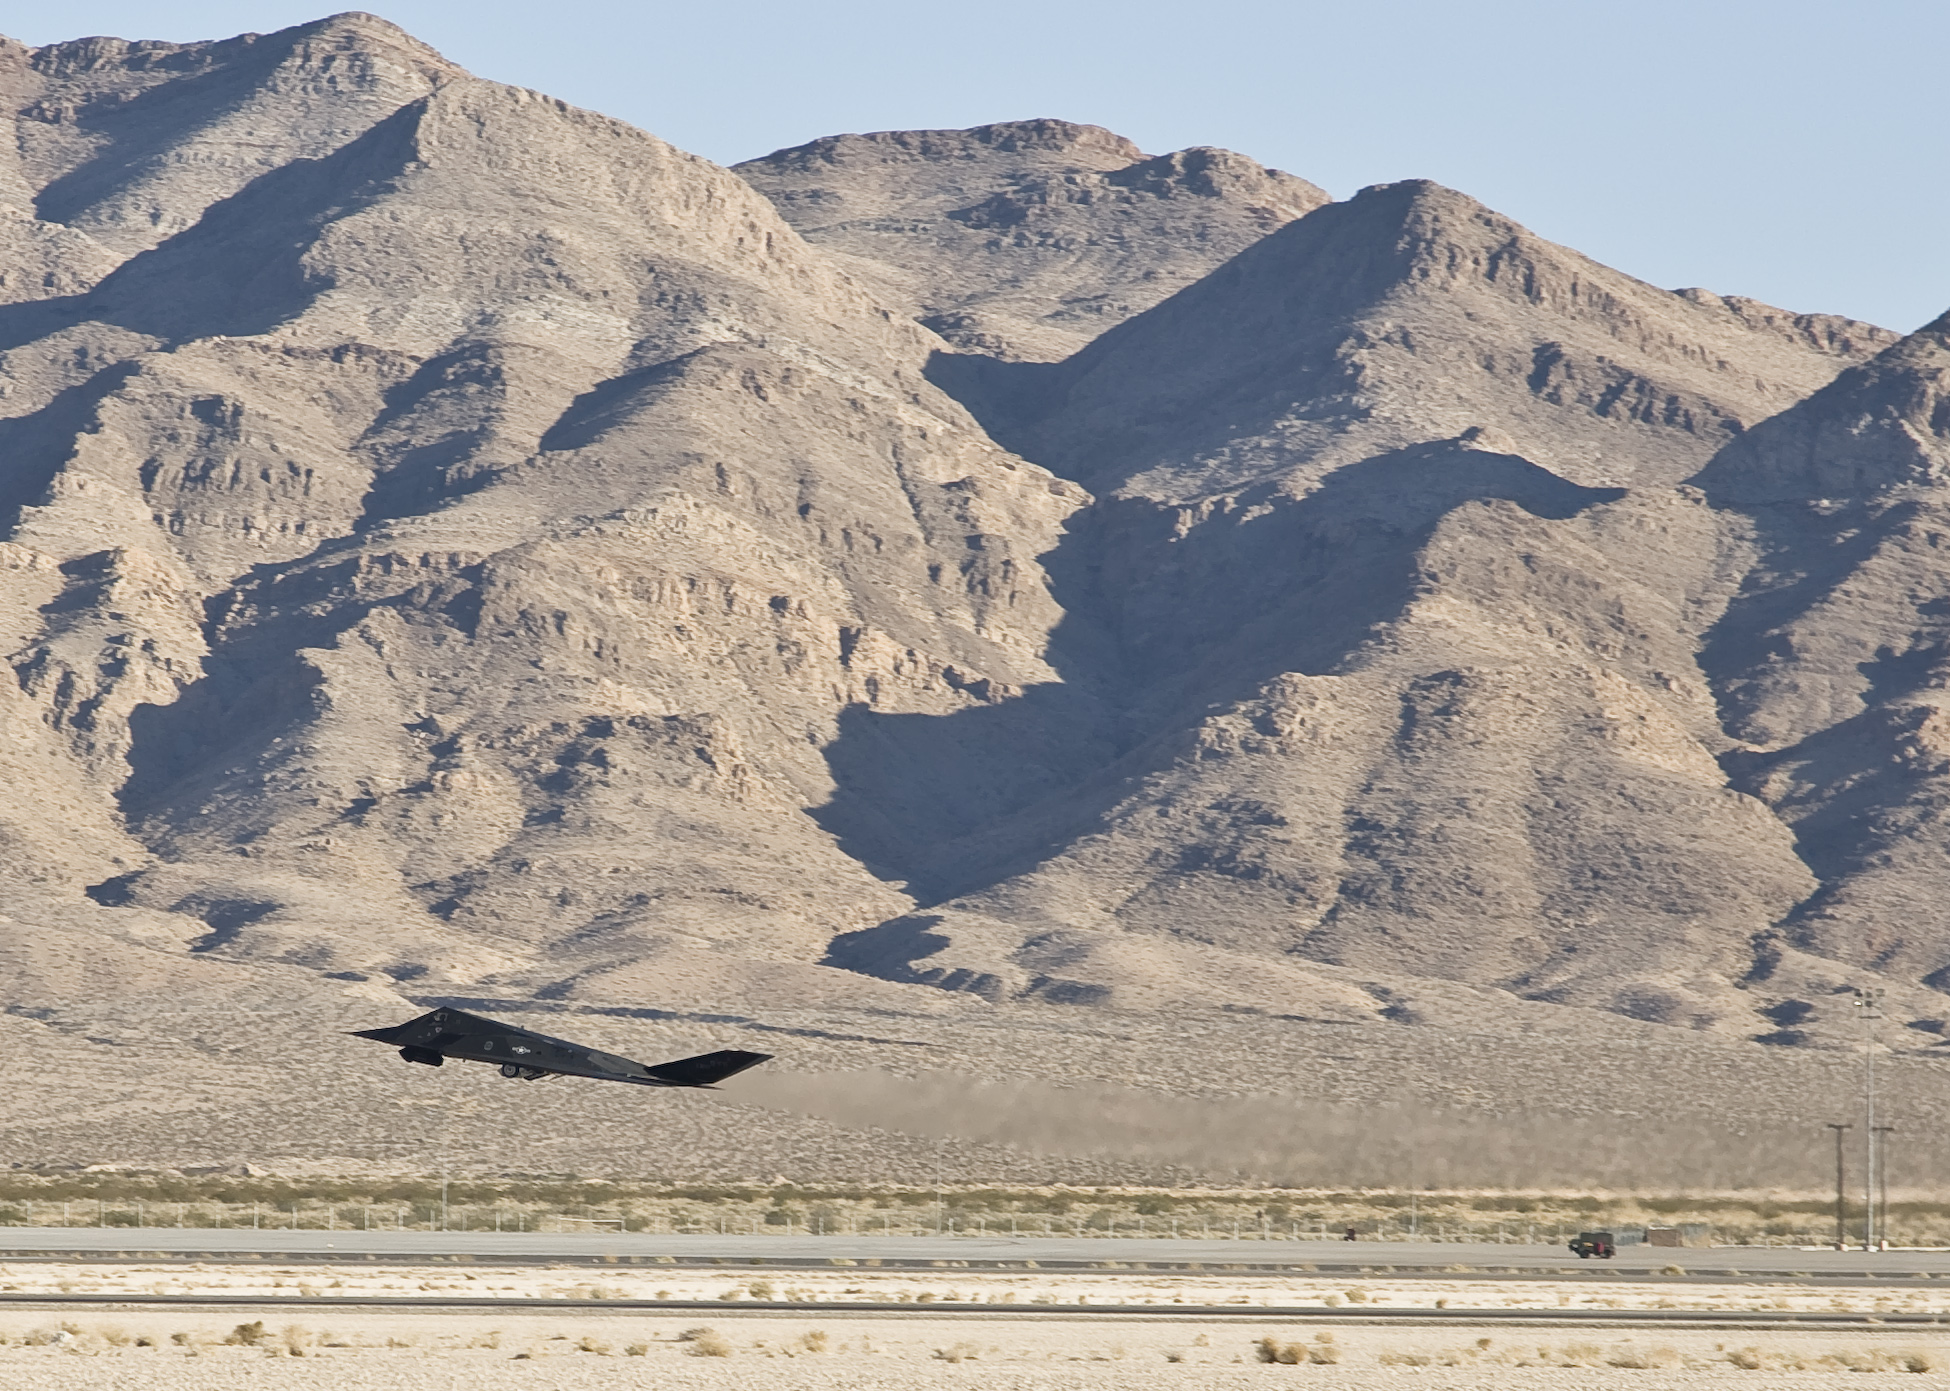 A Lockheed F-117A Nighthawk takes off from Groom Lake, Nevada.